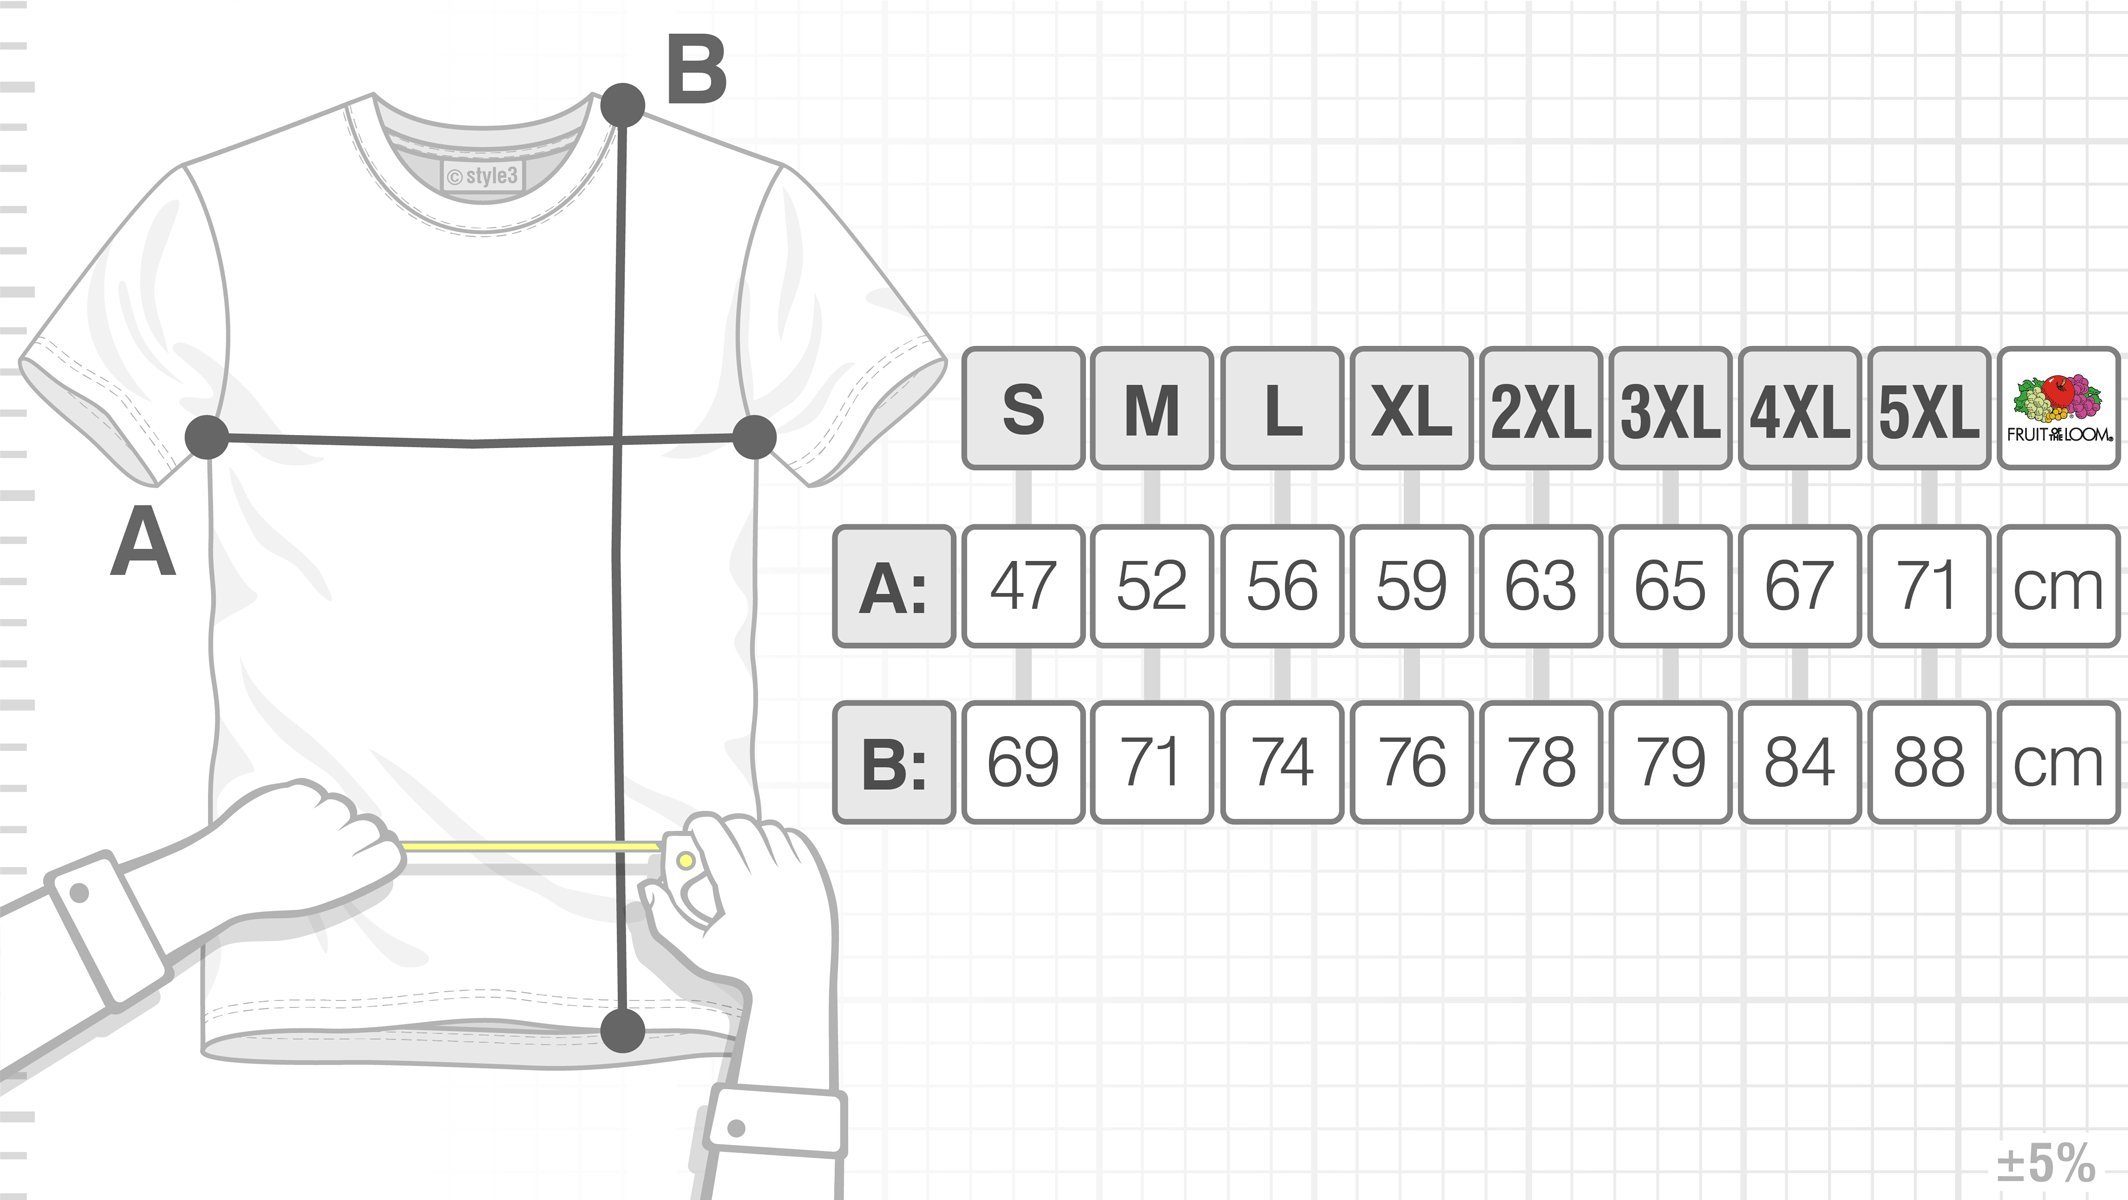 Print-Shirt mathematik W20 Zauberwürfel cooper bang Herren big theory style3 the schwarz Sheldon T-Shirt